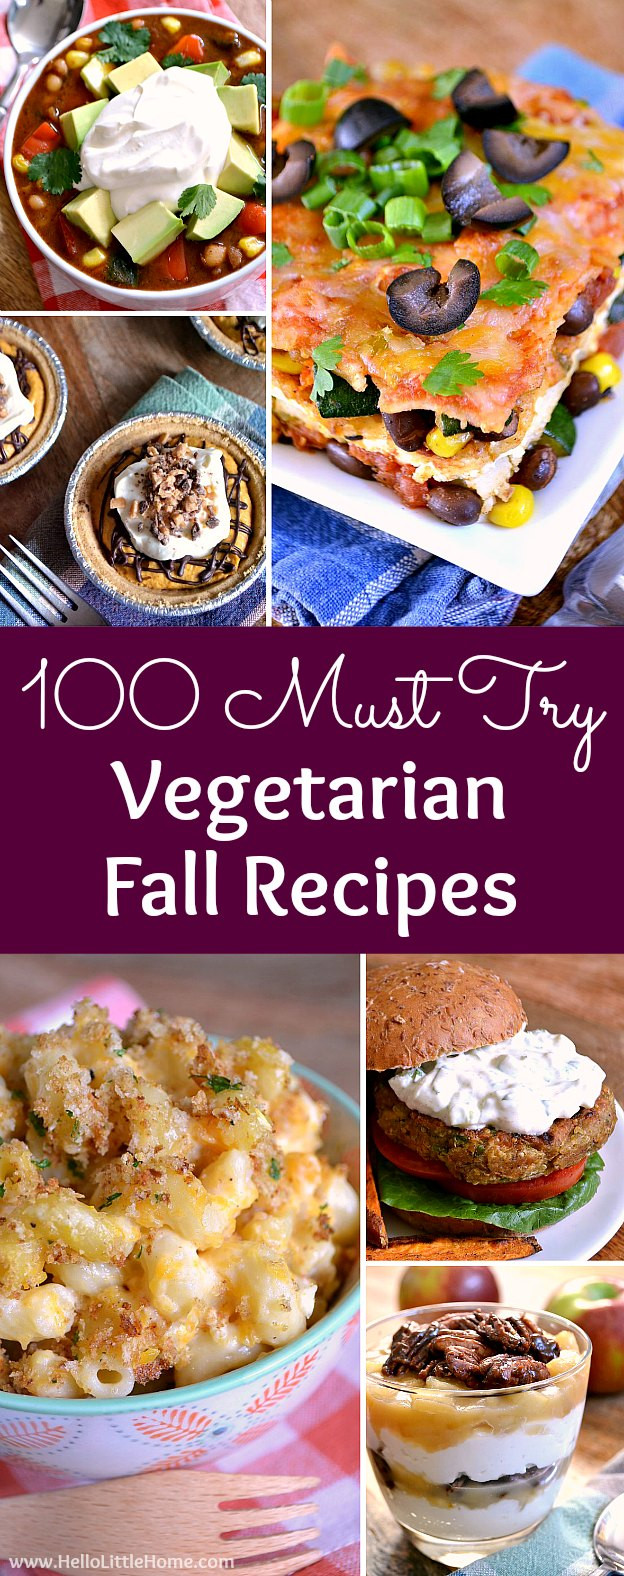 Fall Vegetarian Recipes
 100 Must Try Ve arian Fall Recipes